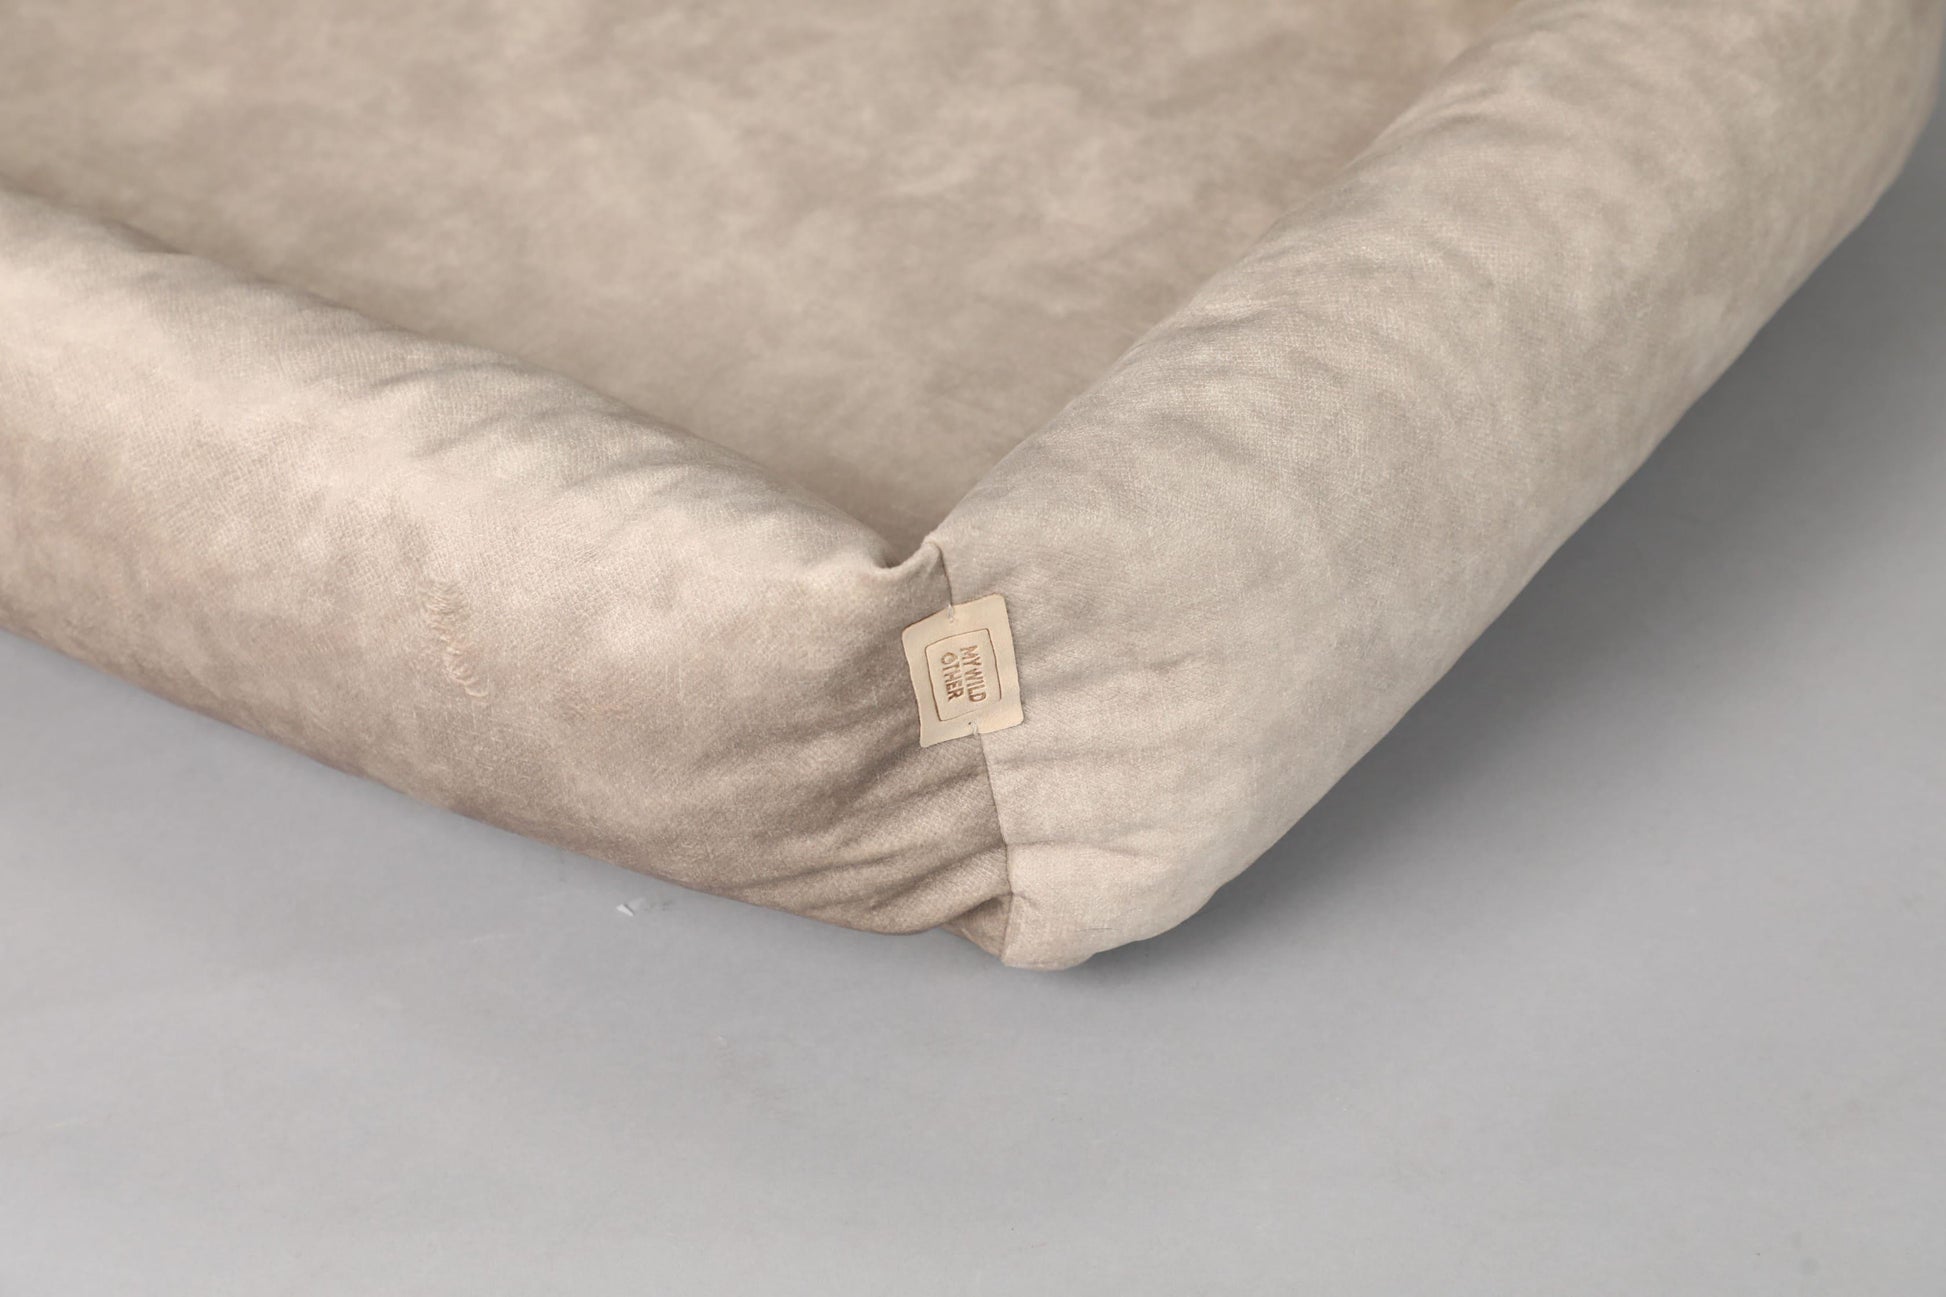 Premium dog bed with sides | 2-sided | BEIGE - premium dog goods handmade in Europe by animalistus